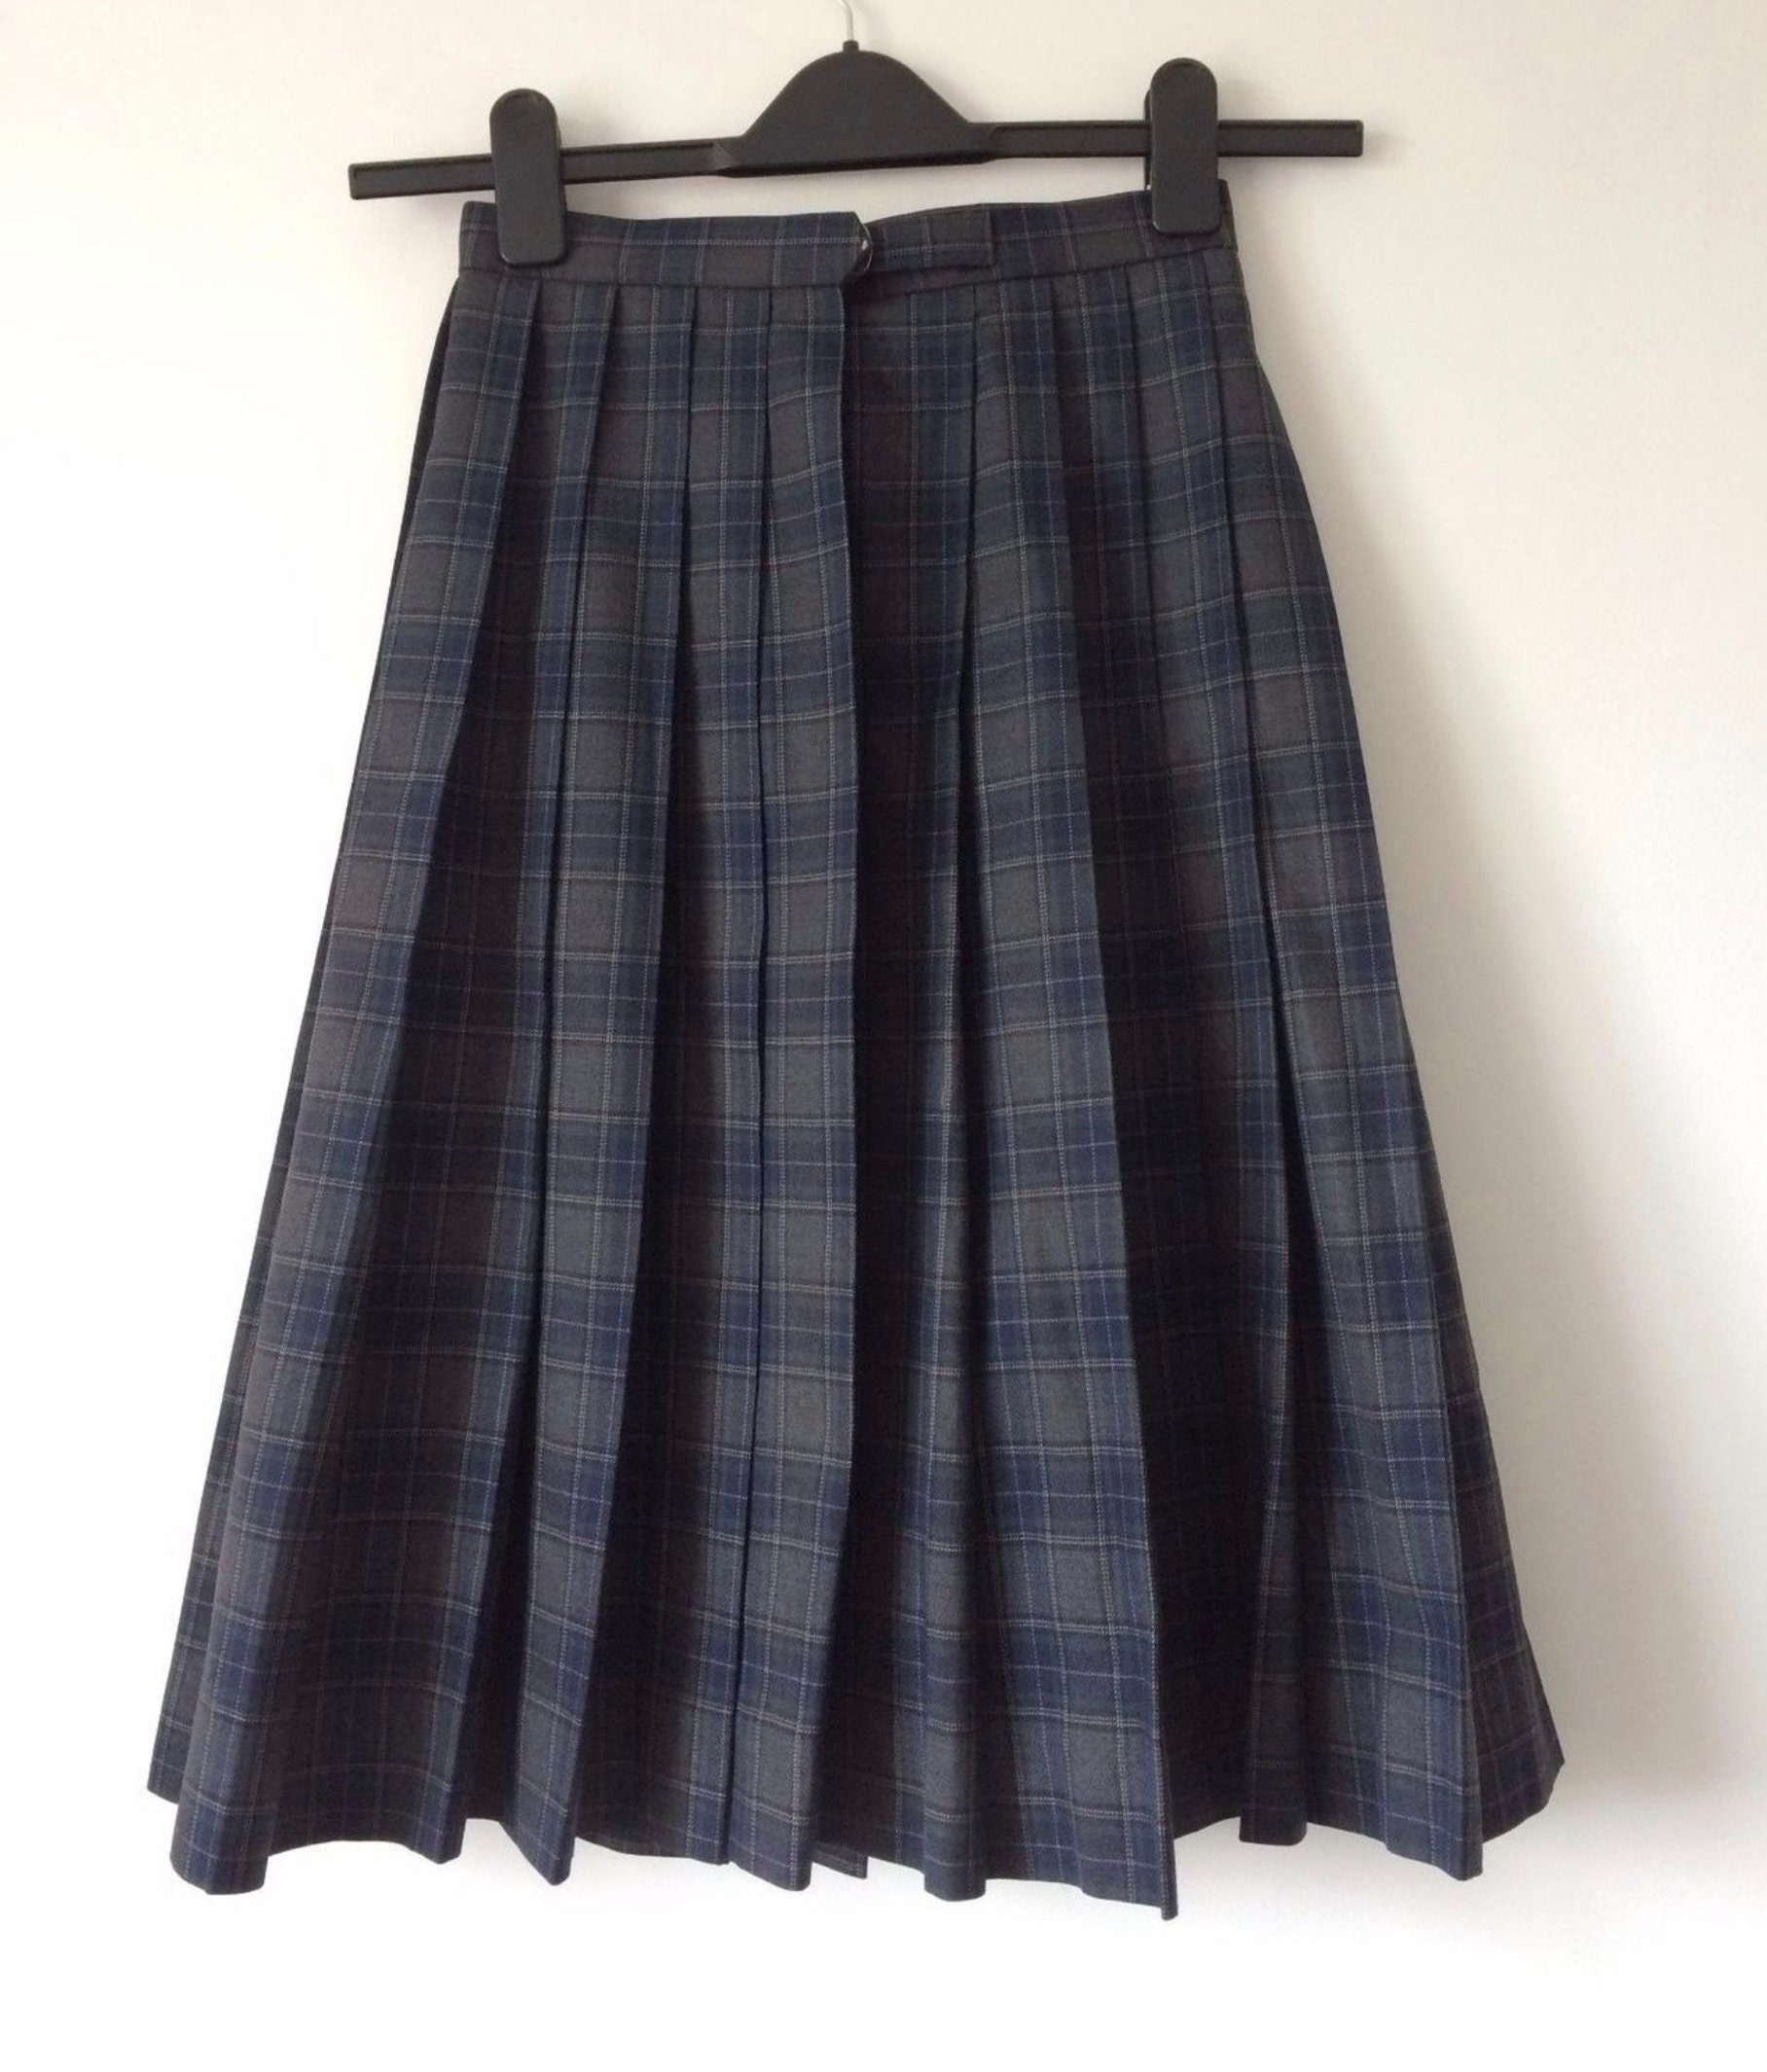 Japanese School Girl Uniform Authentic Skirt Wool & - Etsy UK